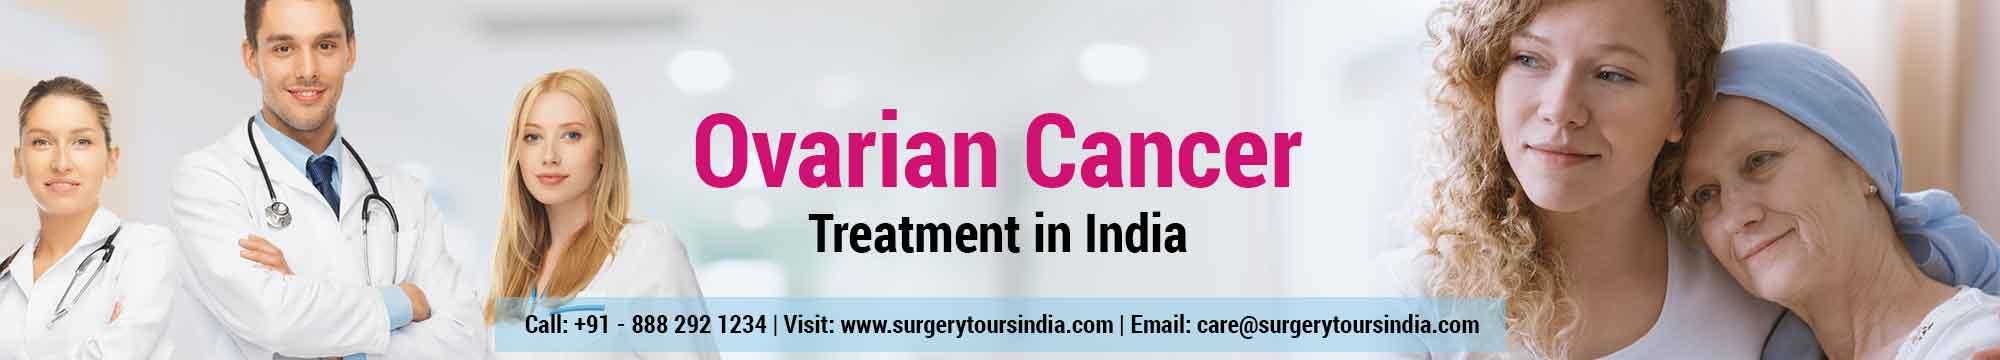 Ovarian Cancer Treatment India